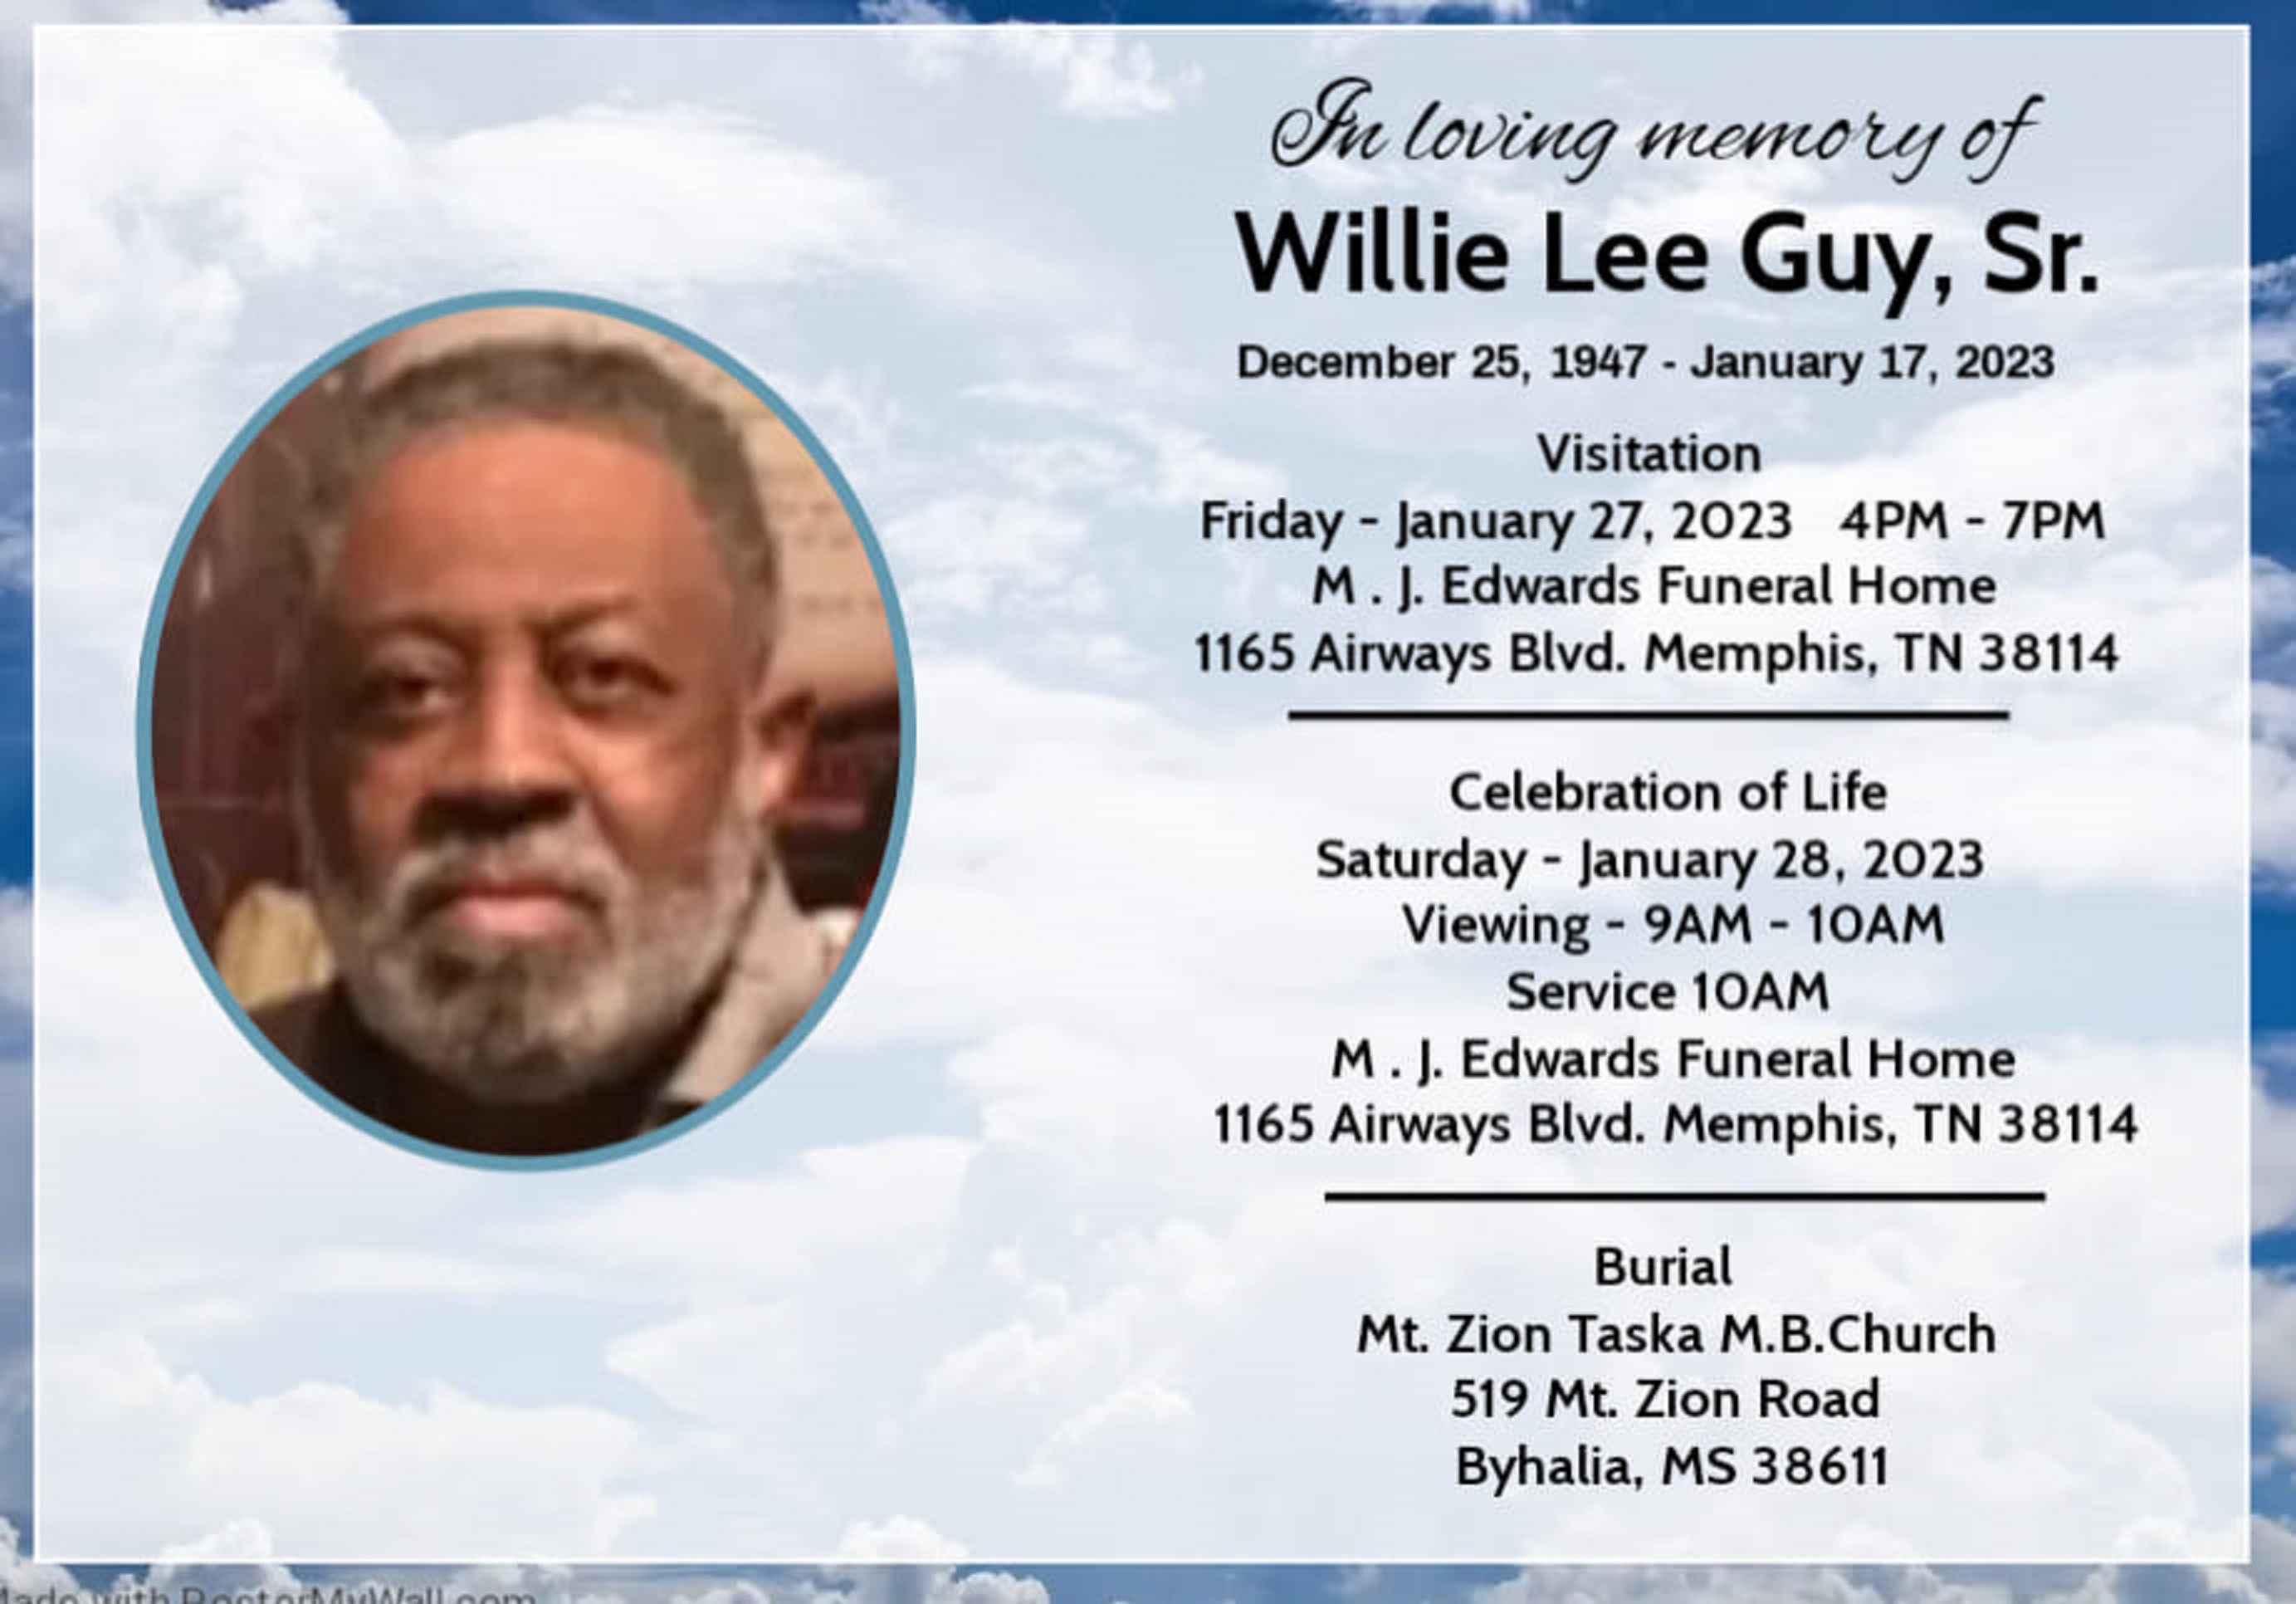 Willie Lee Guy Sr.